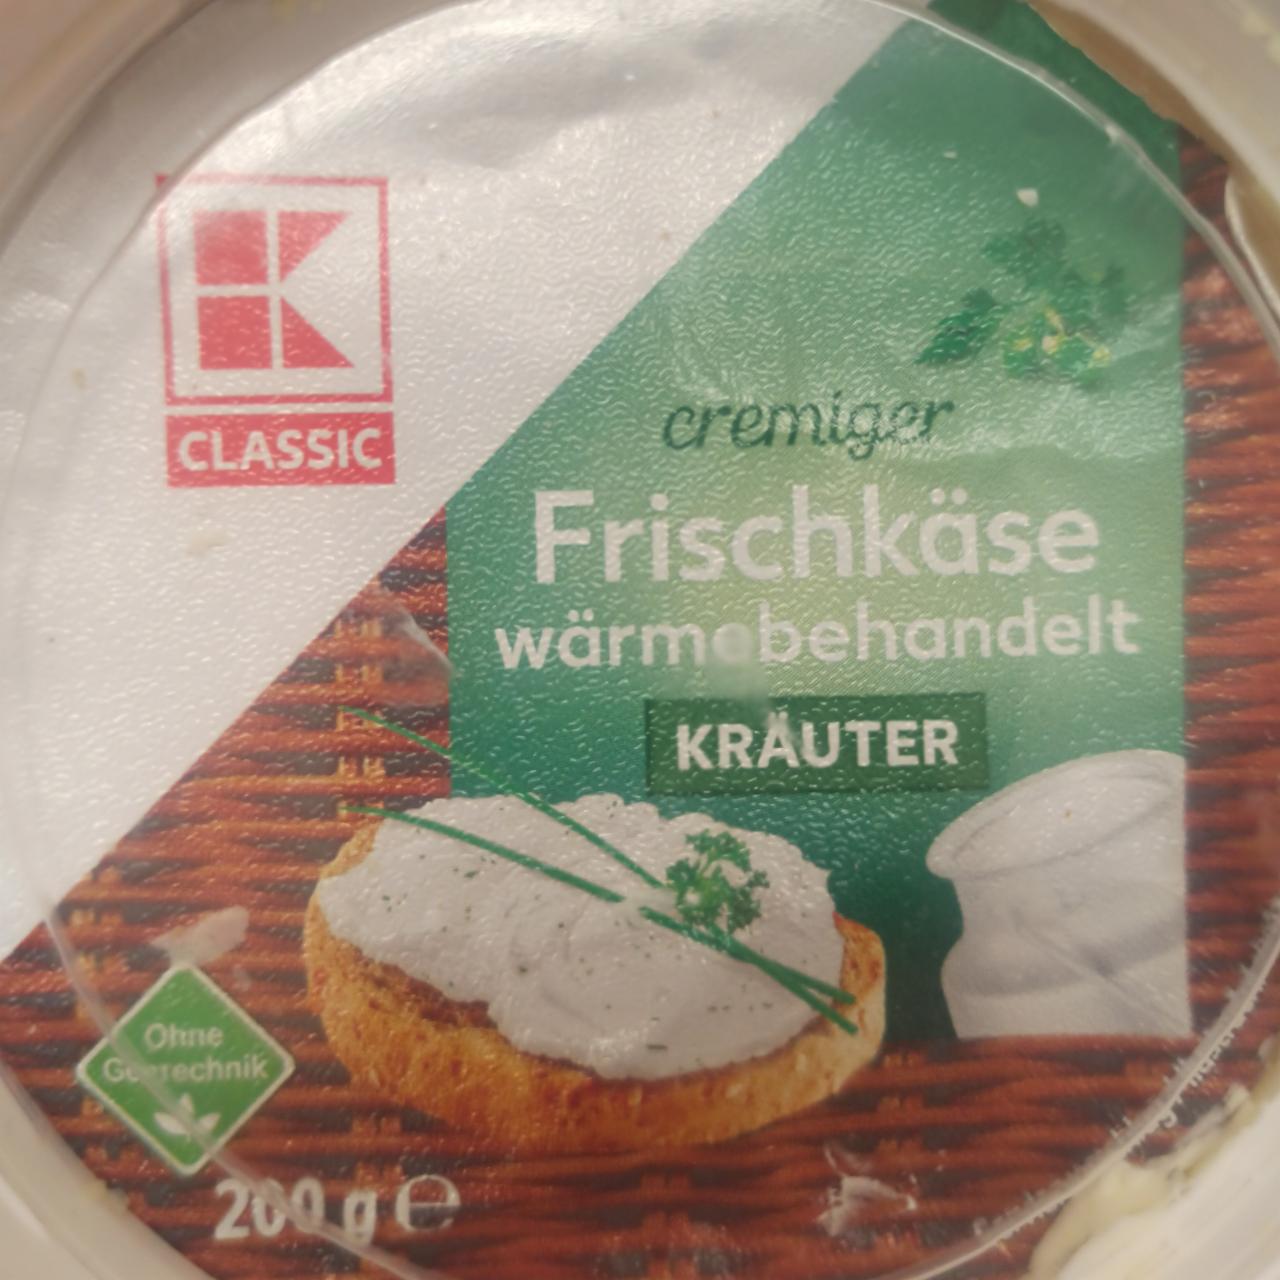 Fotografie - Cremiger Frischkäse wärmebehandelt Kräuter K-Classic